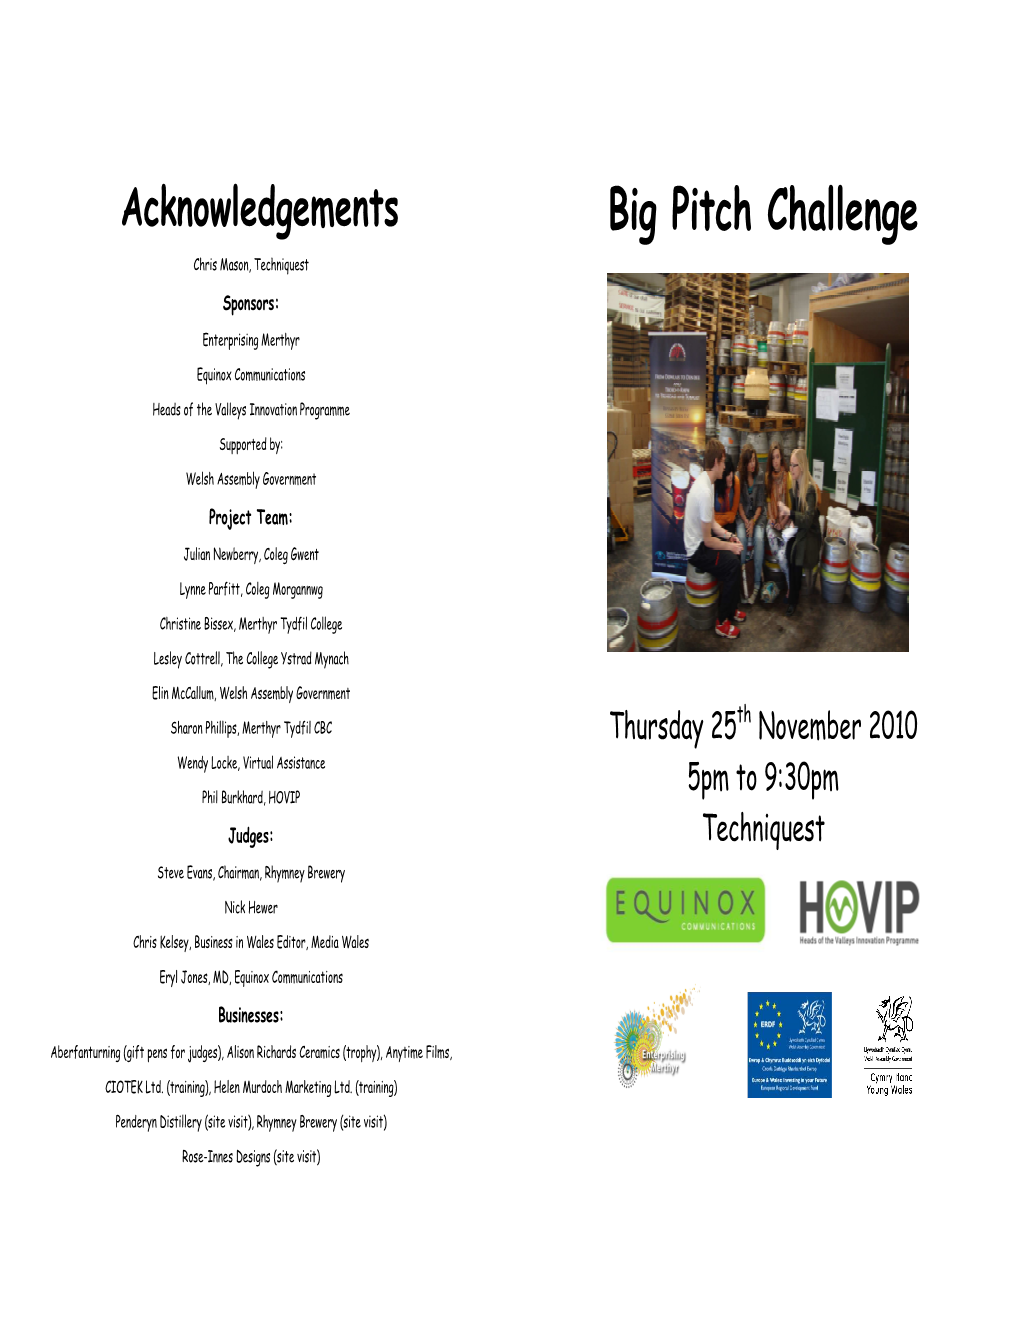 Big Pitch Event Programme